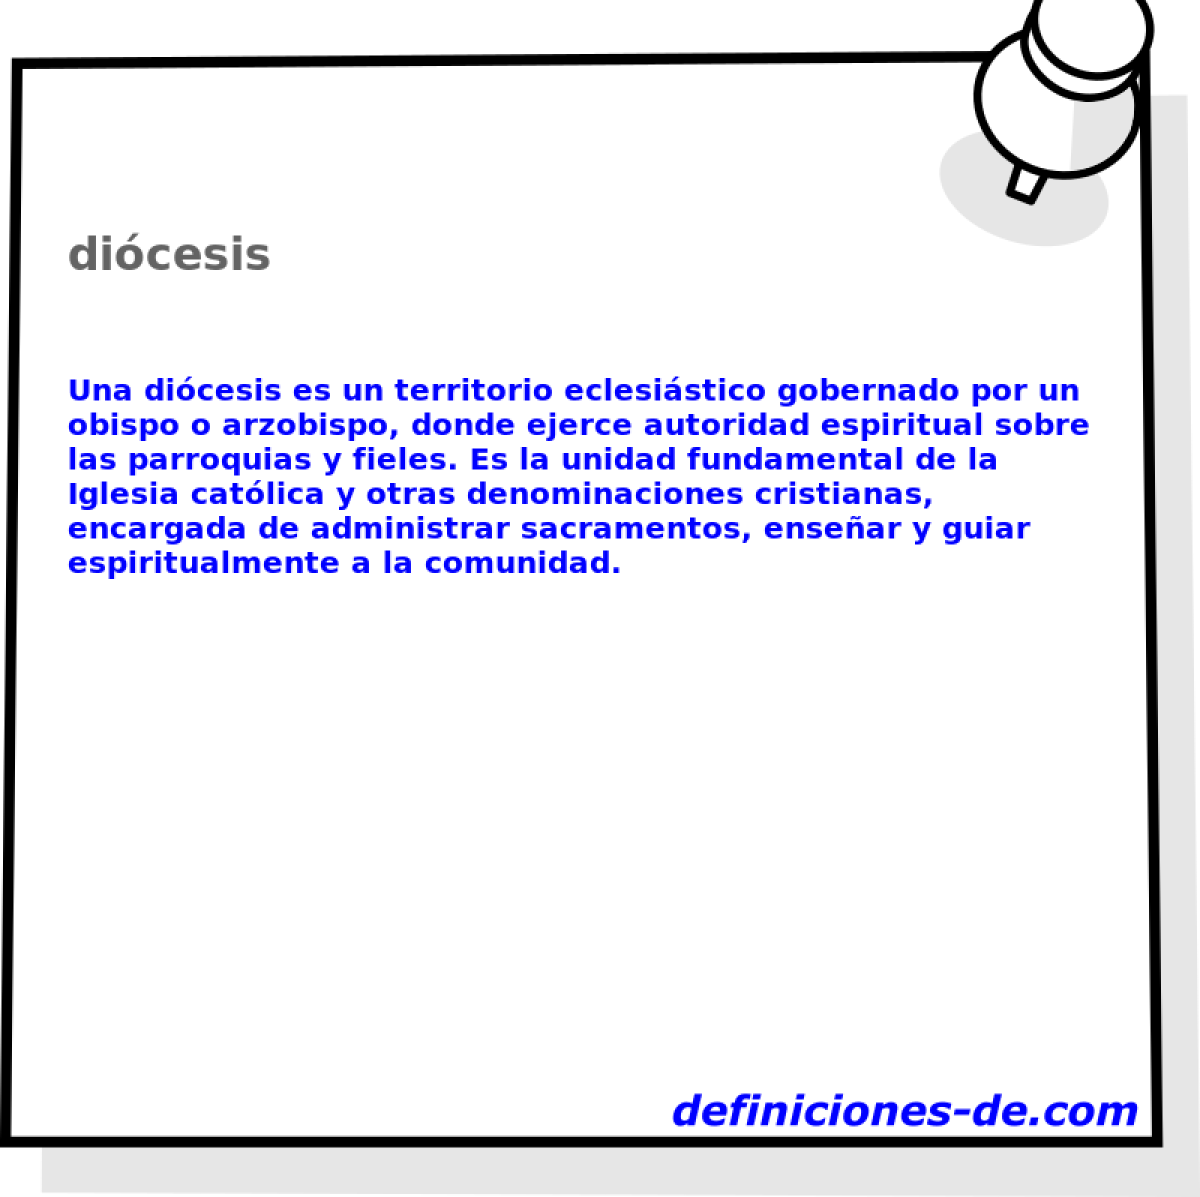 dicesis 